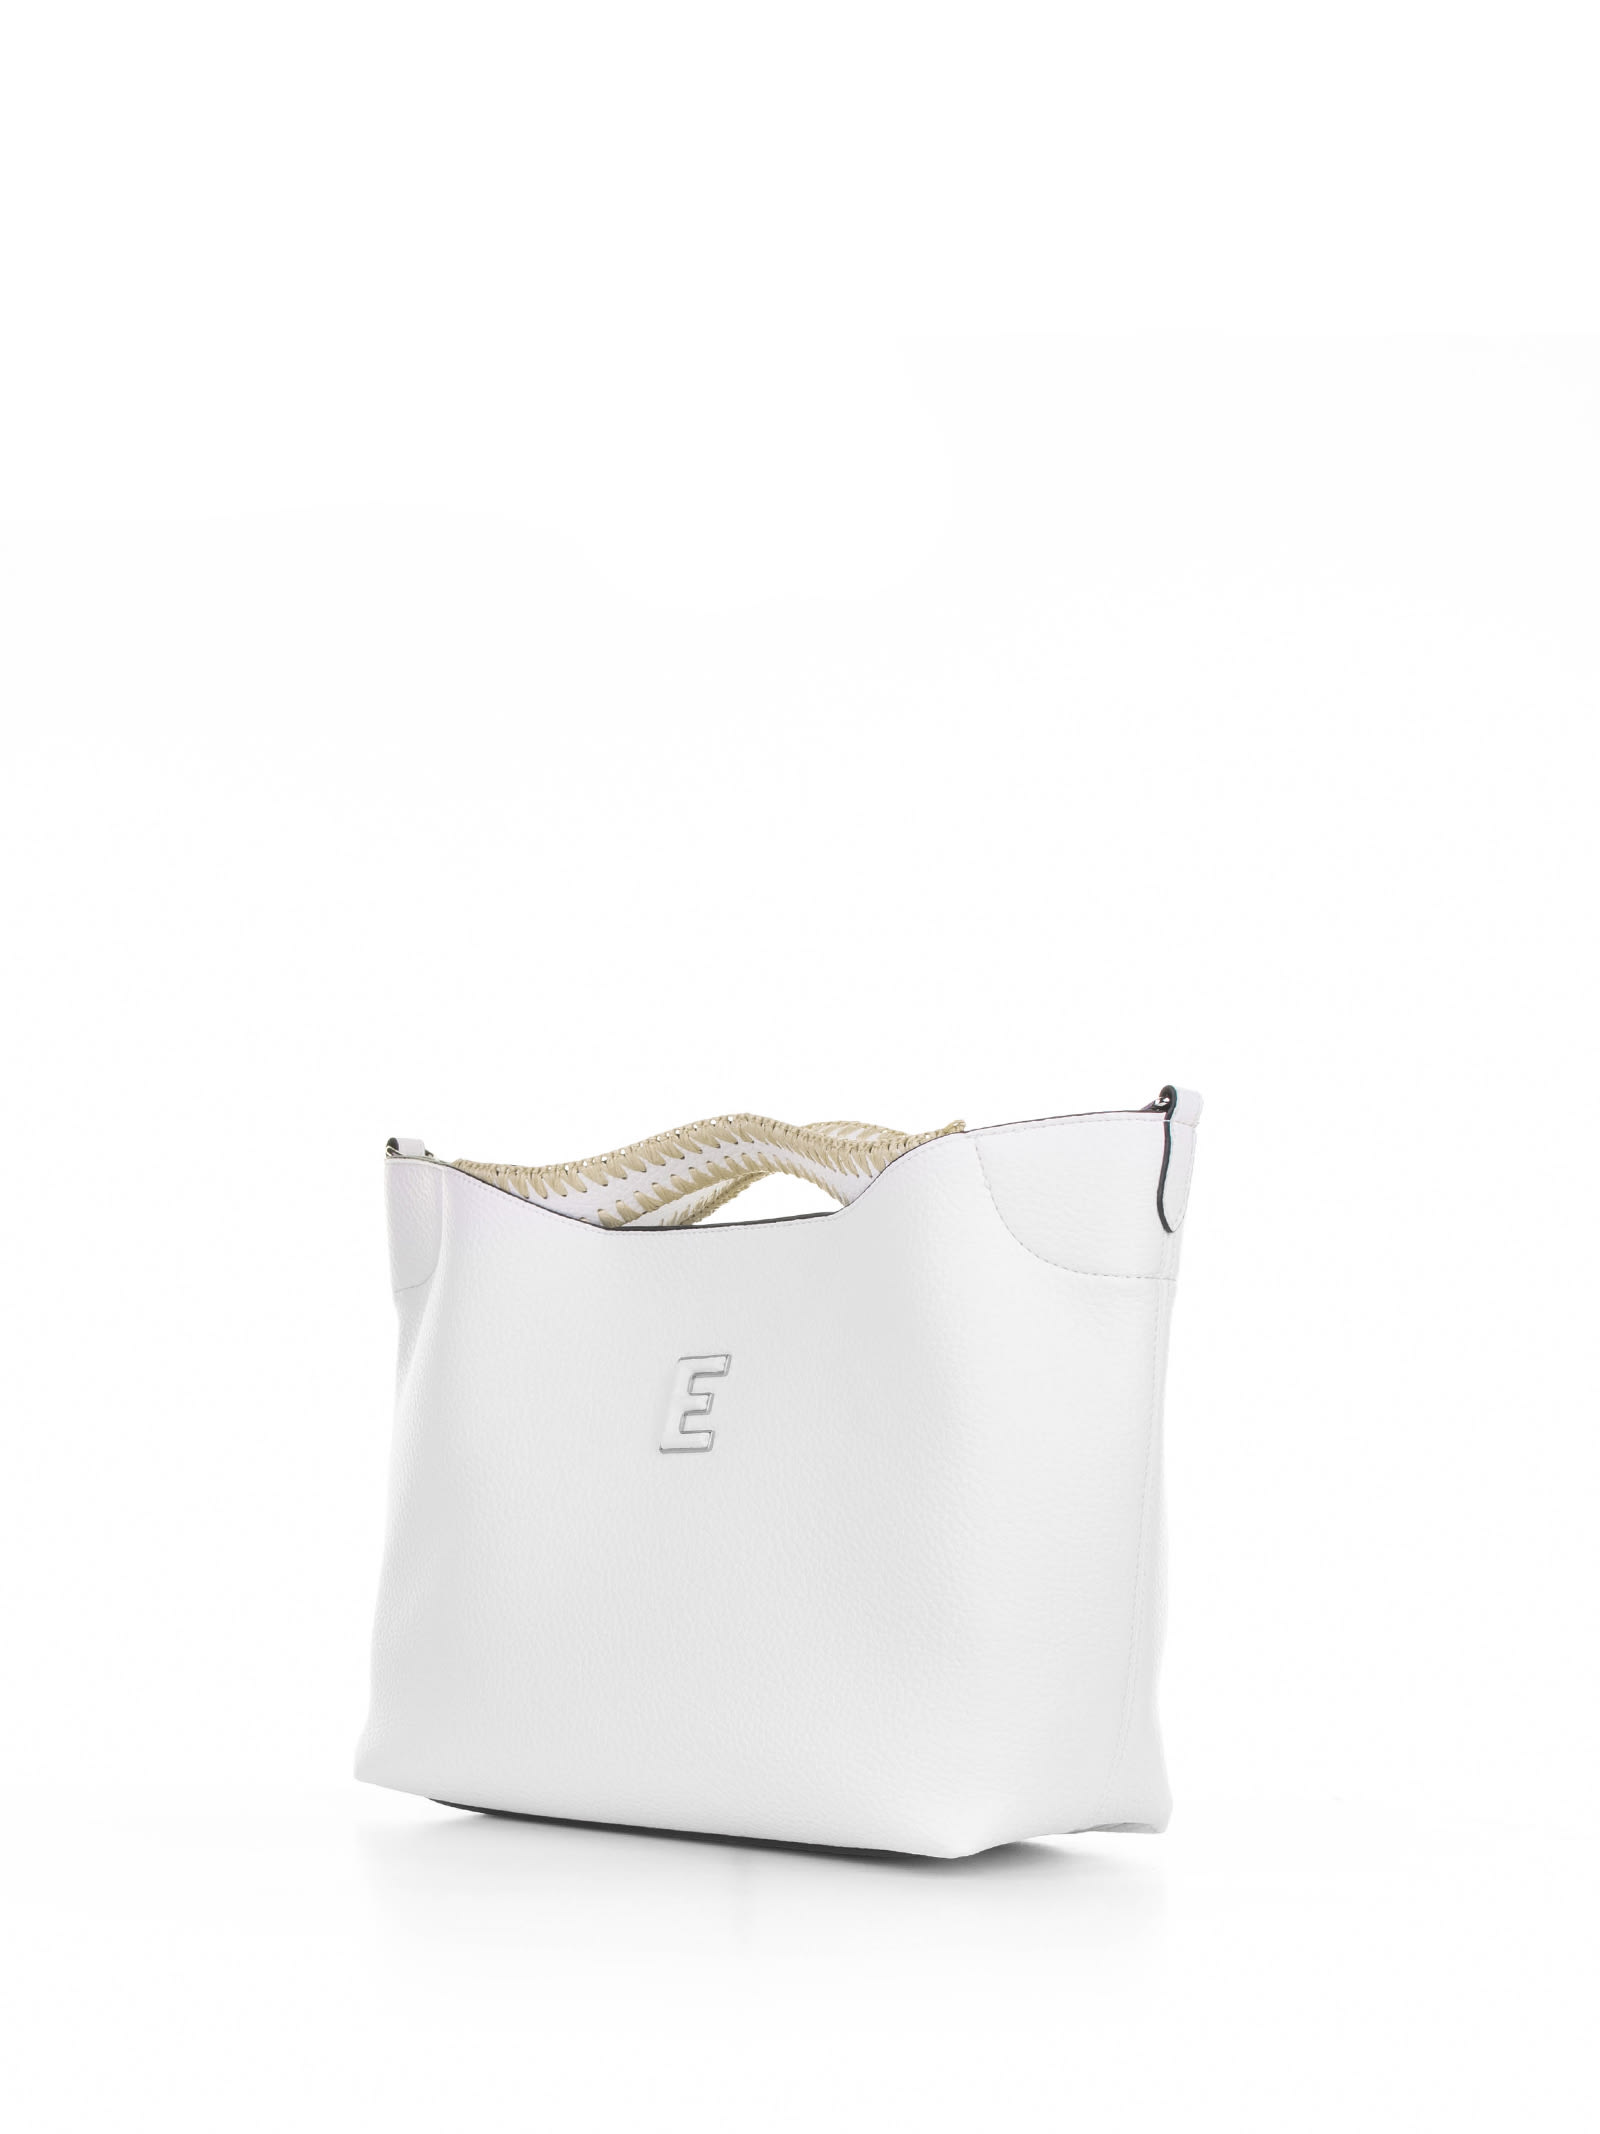 Shop Ermanno Scervino Rachele White Leather Handbag In Bianco